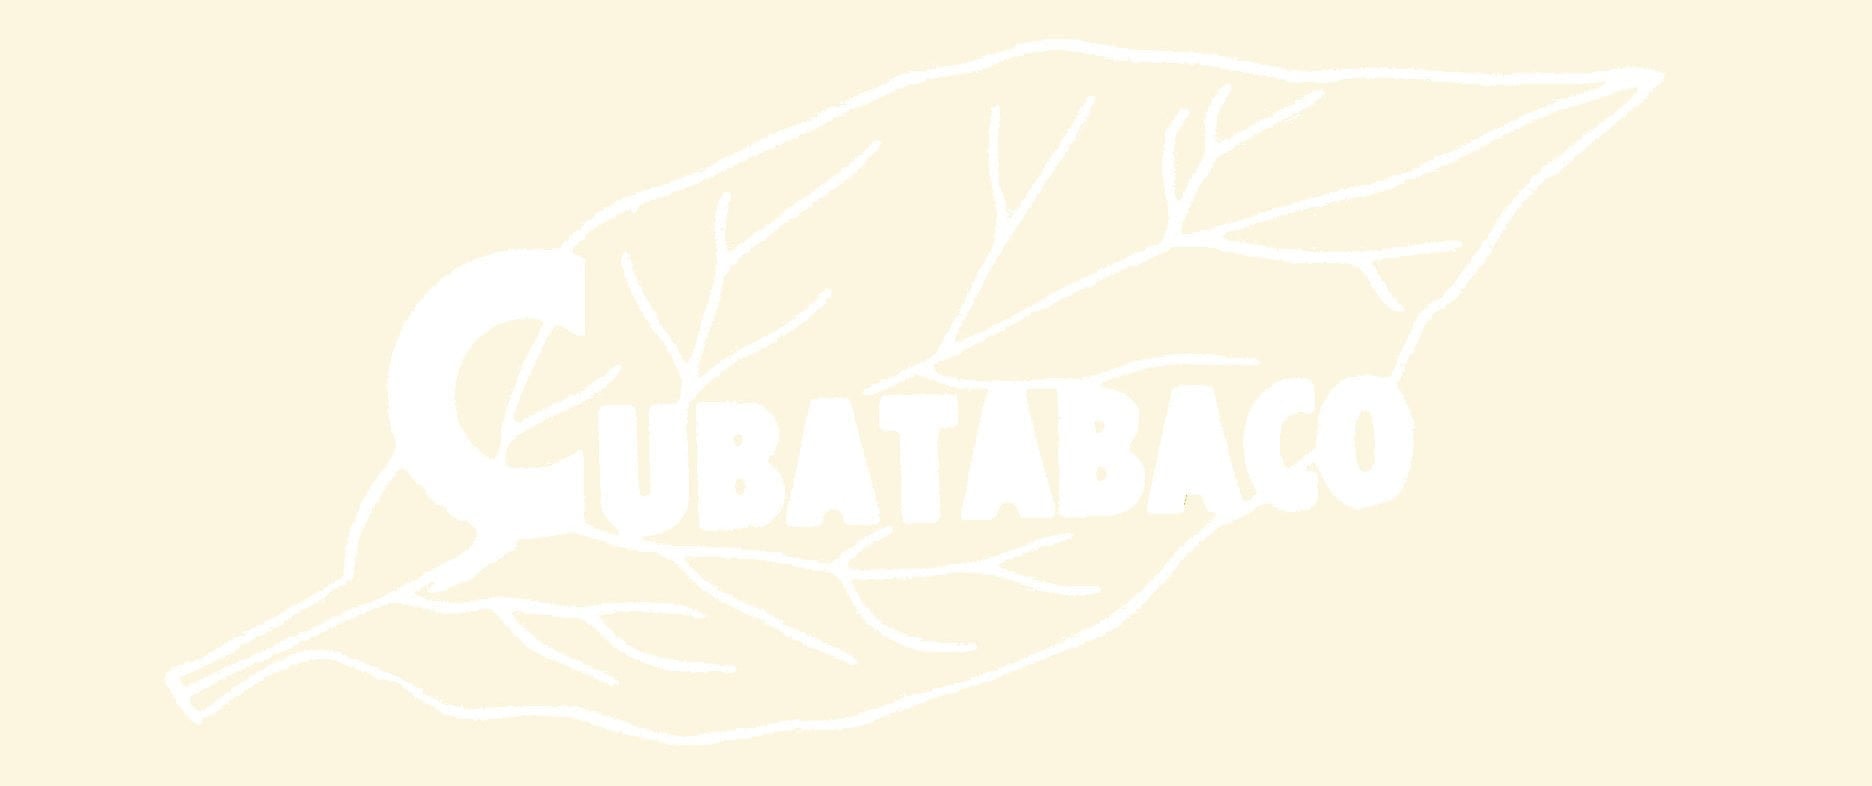 ancien logo cubatabaco 1971